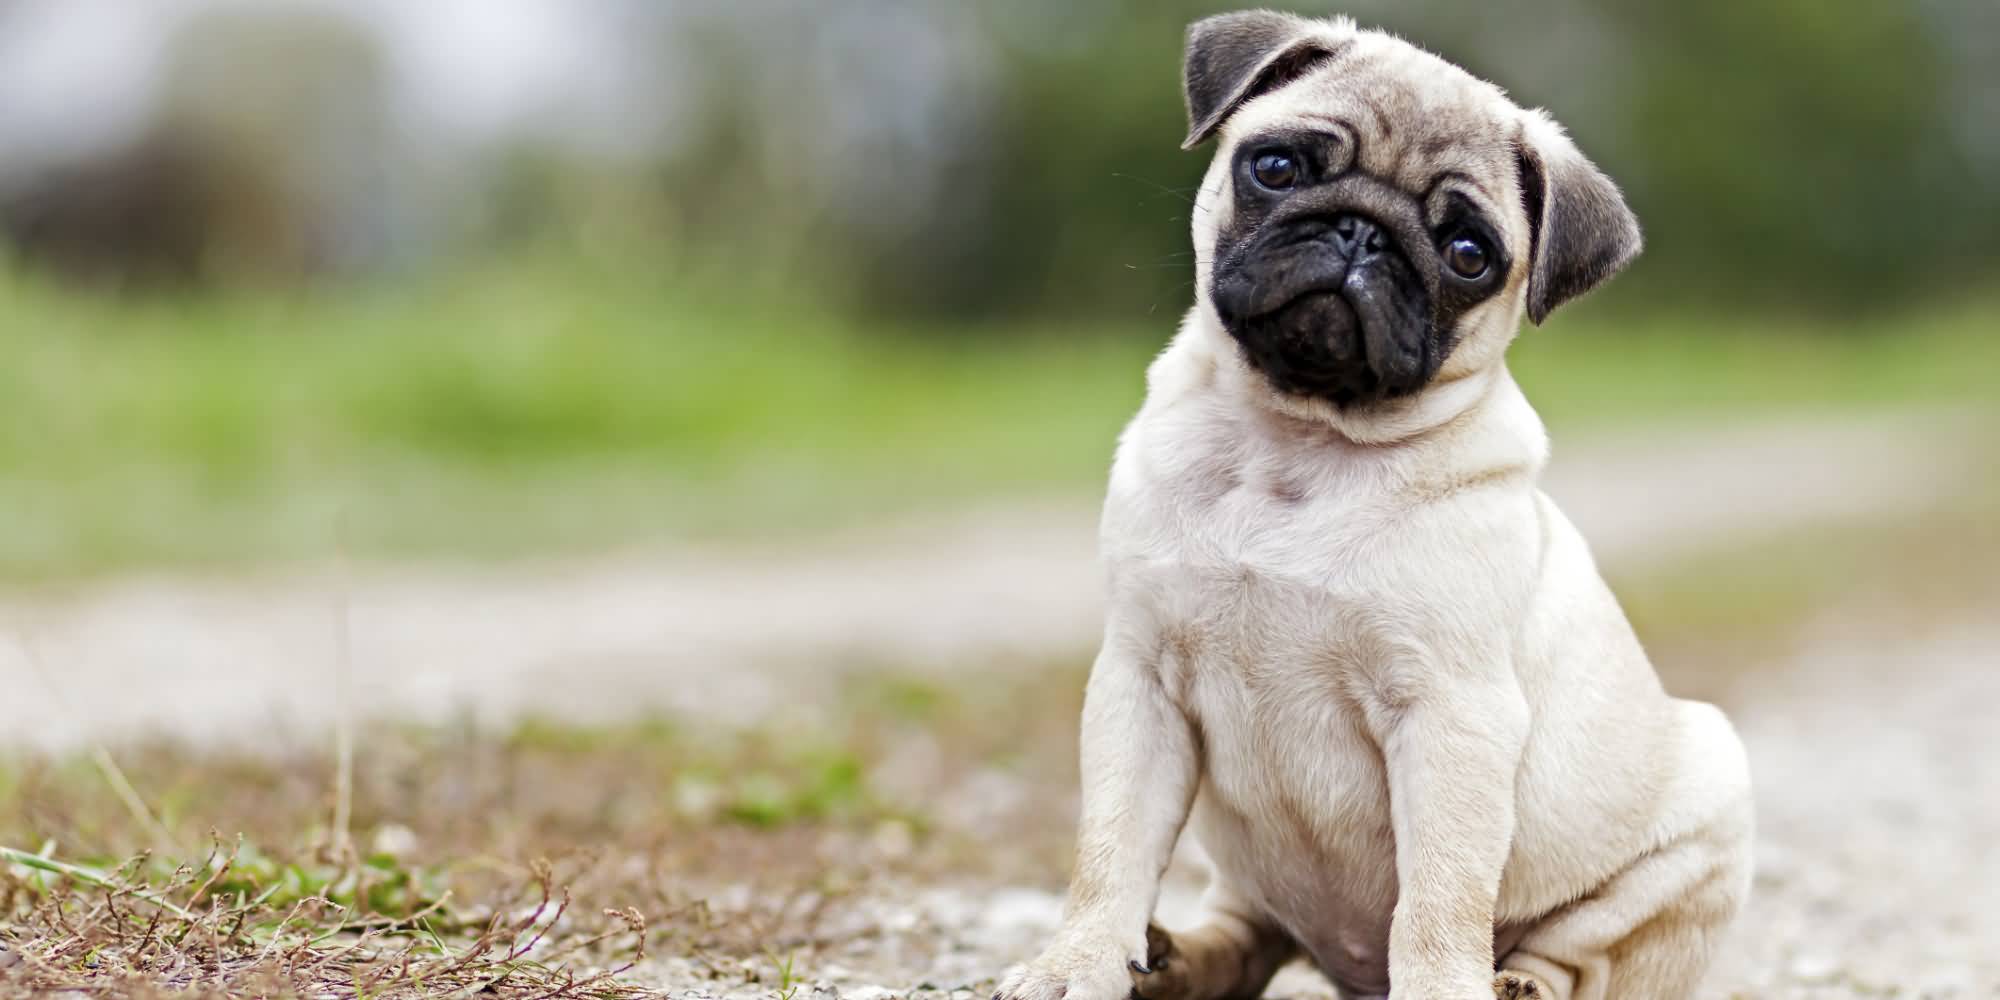 Cutest Pug Dog Image & 4K Wallpaper